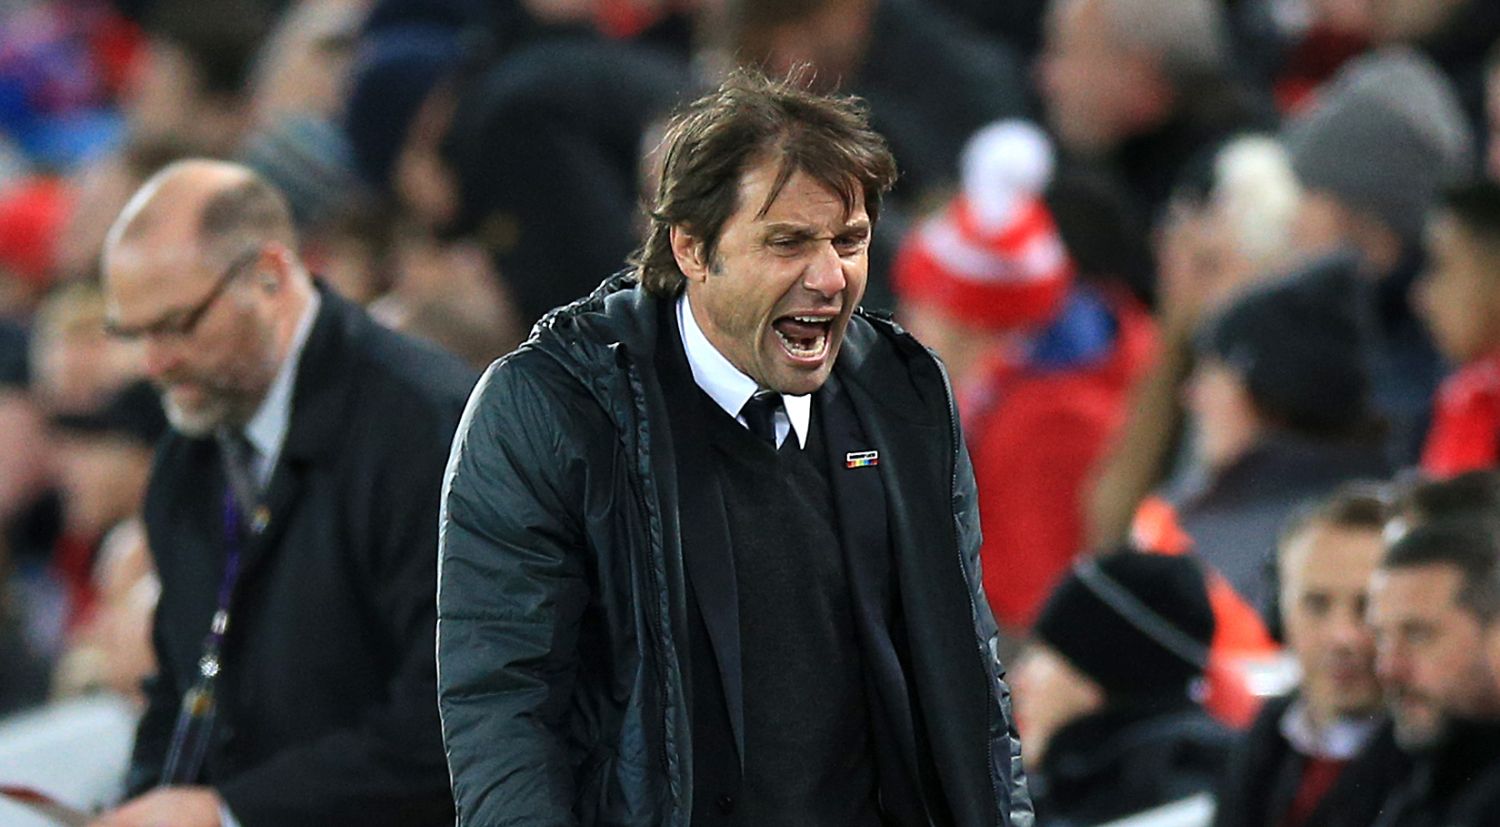 Chelsea boss Antonio Conte moans fixture list gives Liverpool